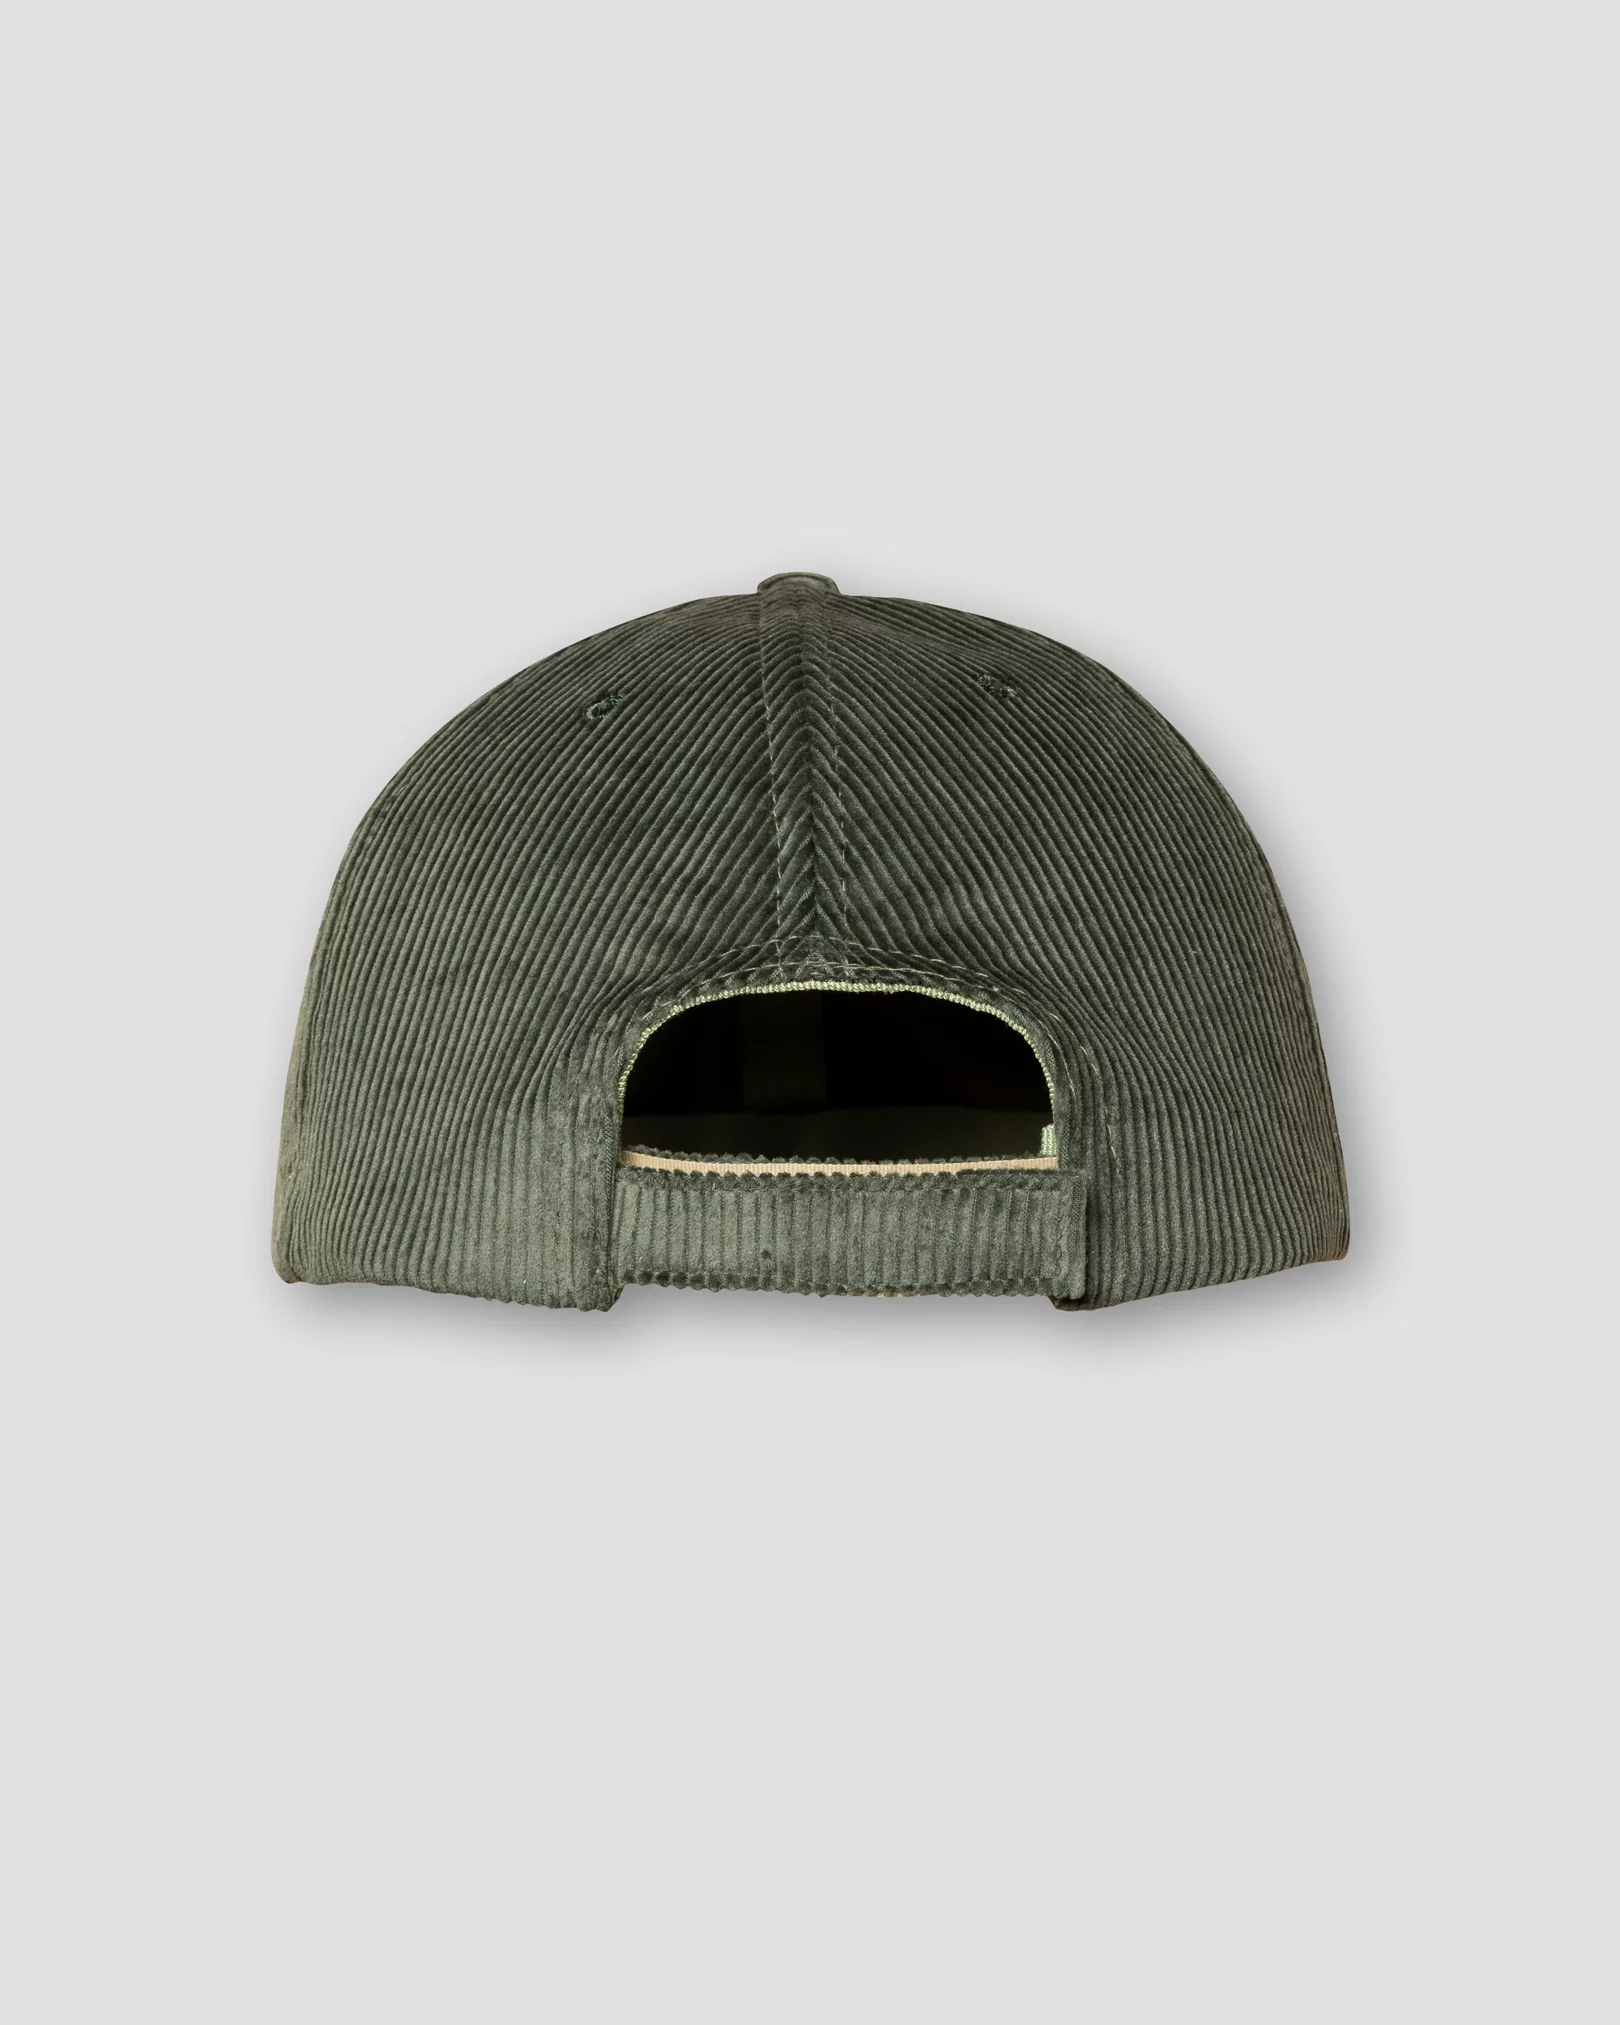 Eton - dark green corduroy baseball cap